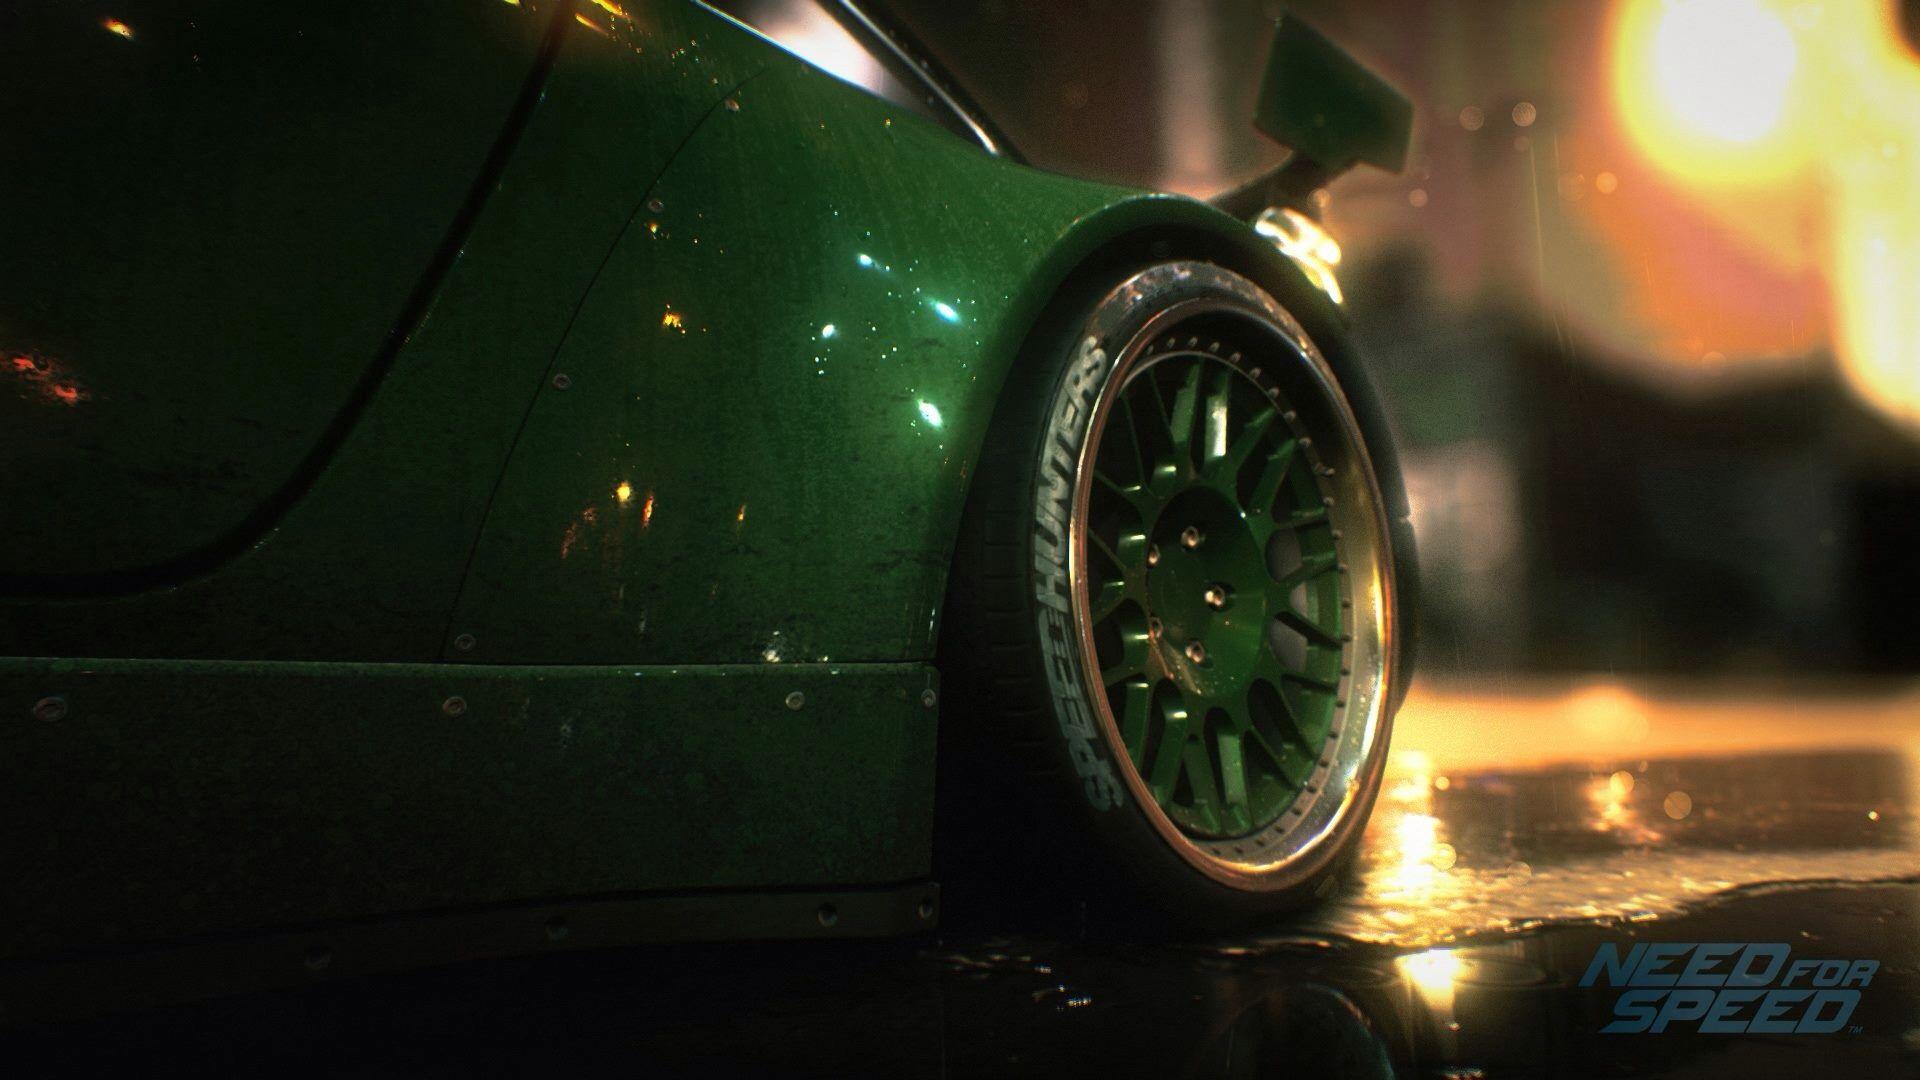 Need for Speed Teaser Shows RWB Porsche, Online Community